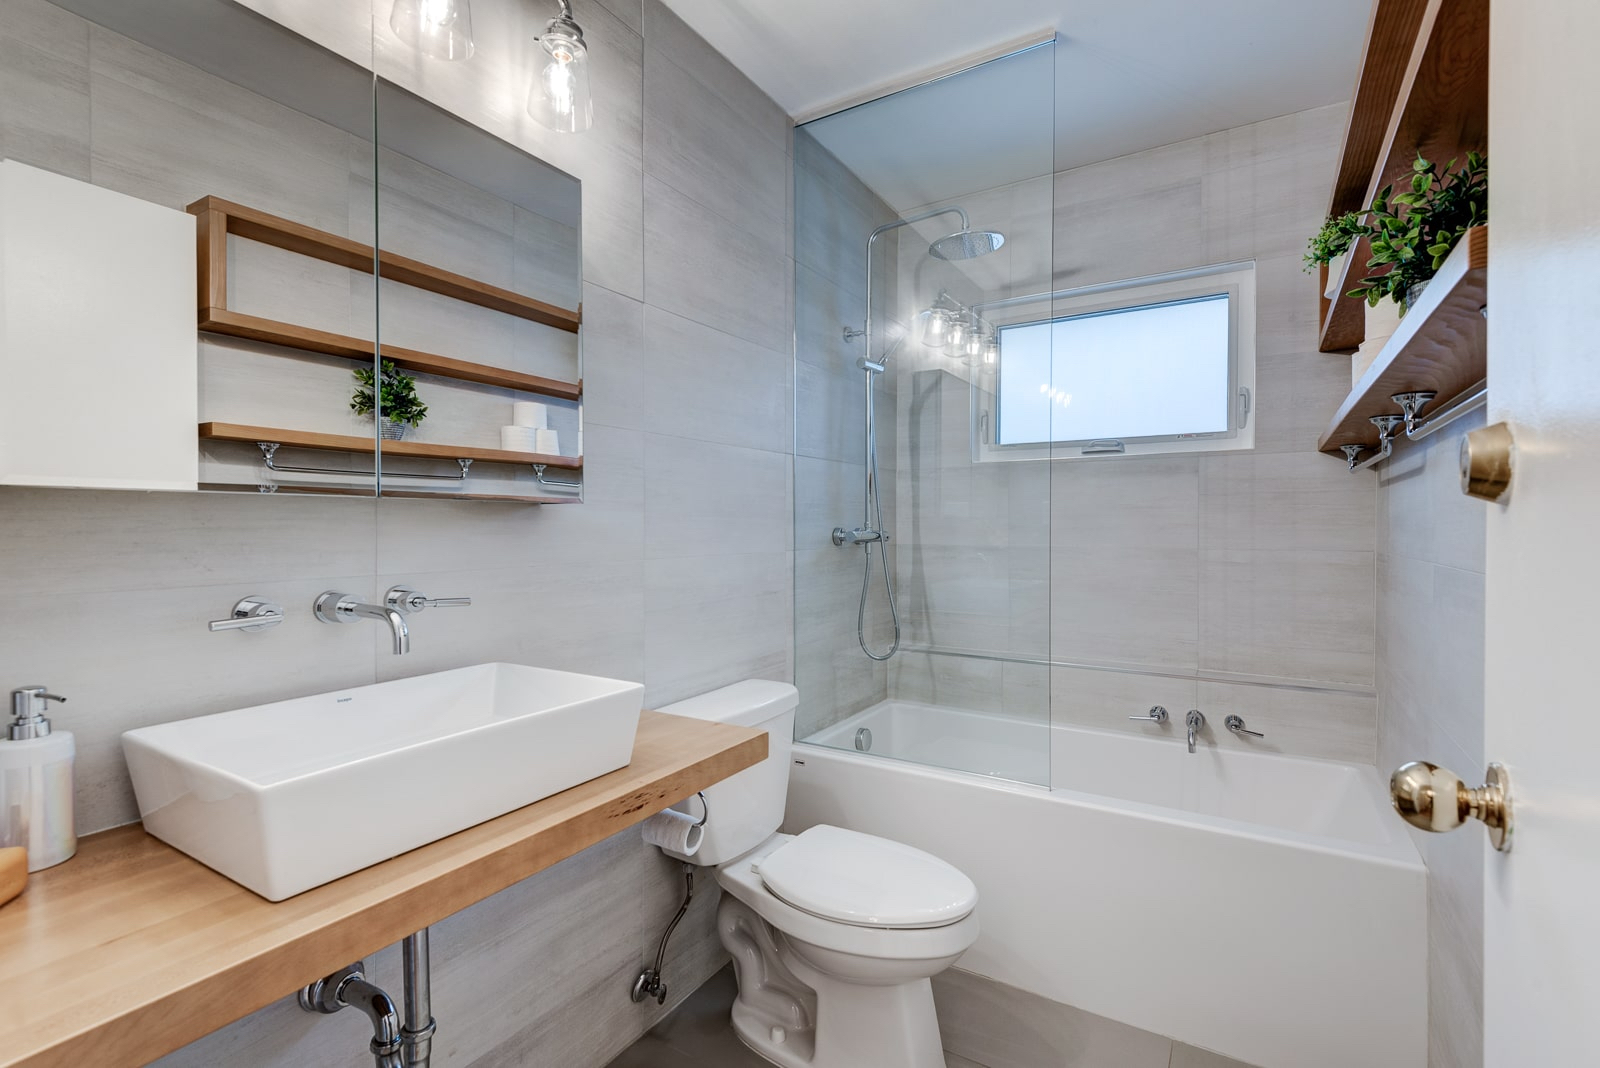 Bathroom renovation in Calgary